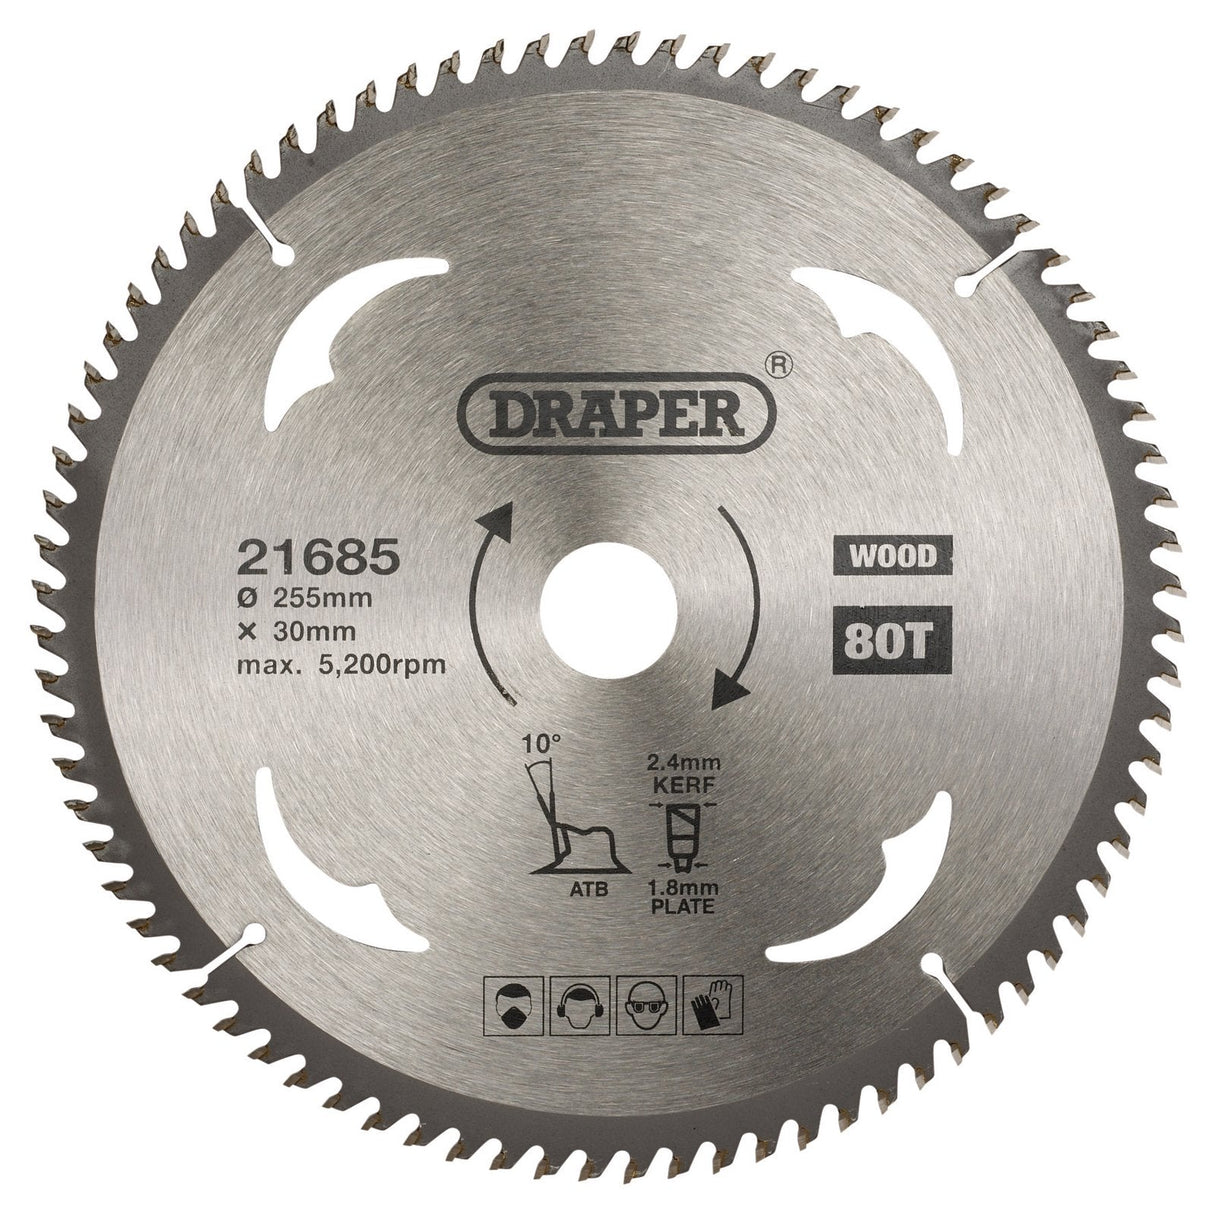 Draper Tct Circular Saw Blade For Wood, 255 X 30mm, 80T - SBW15 - Farming Parts